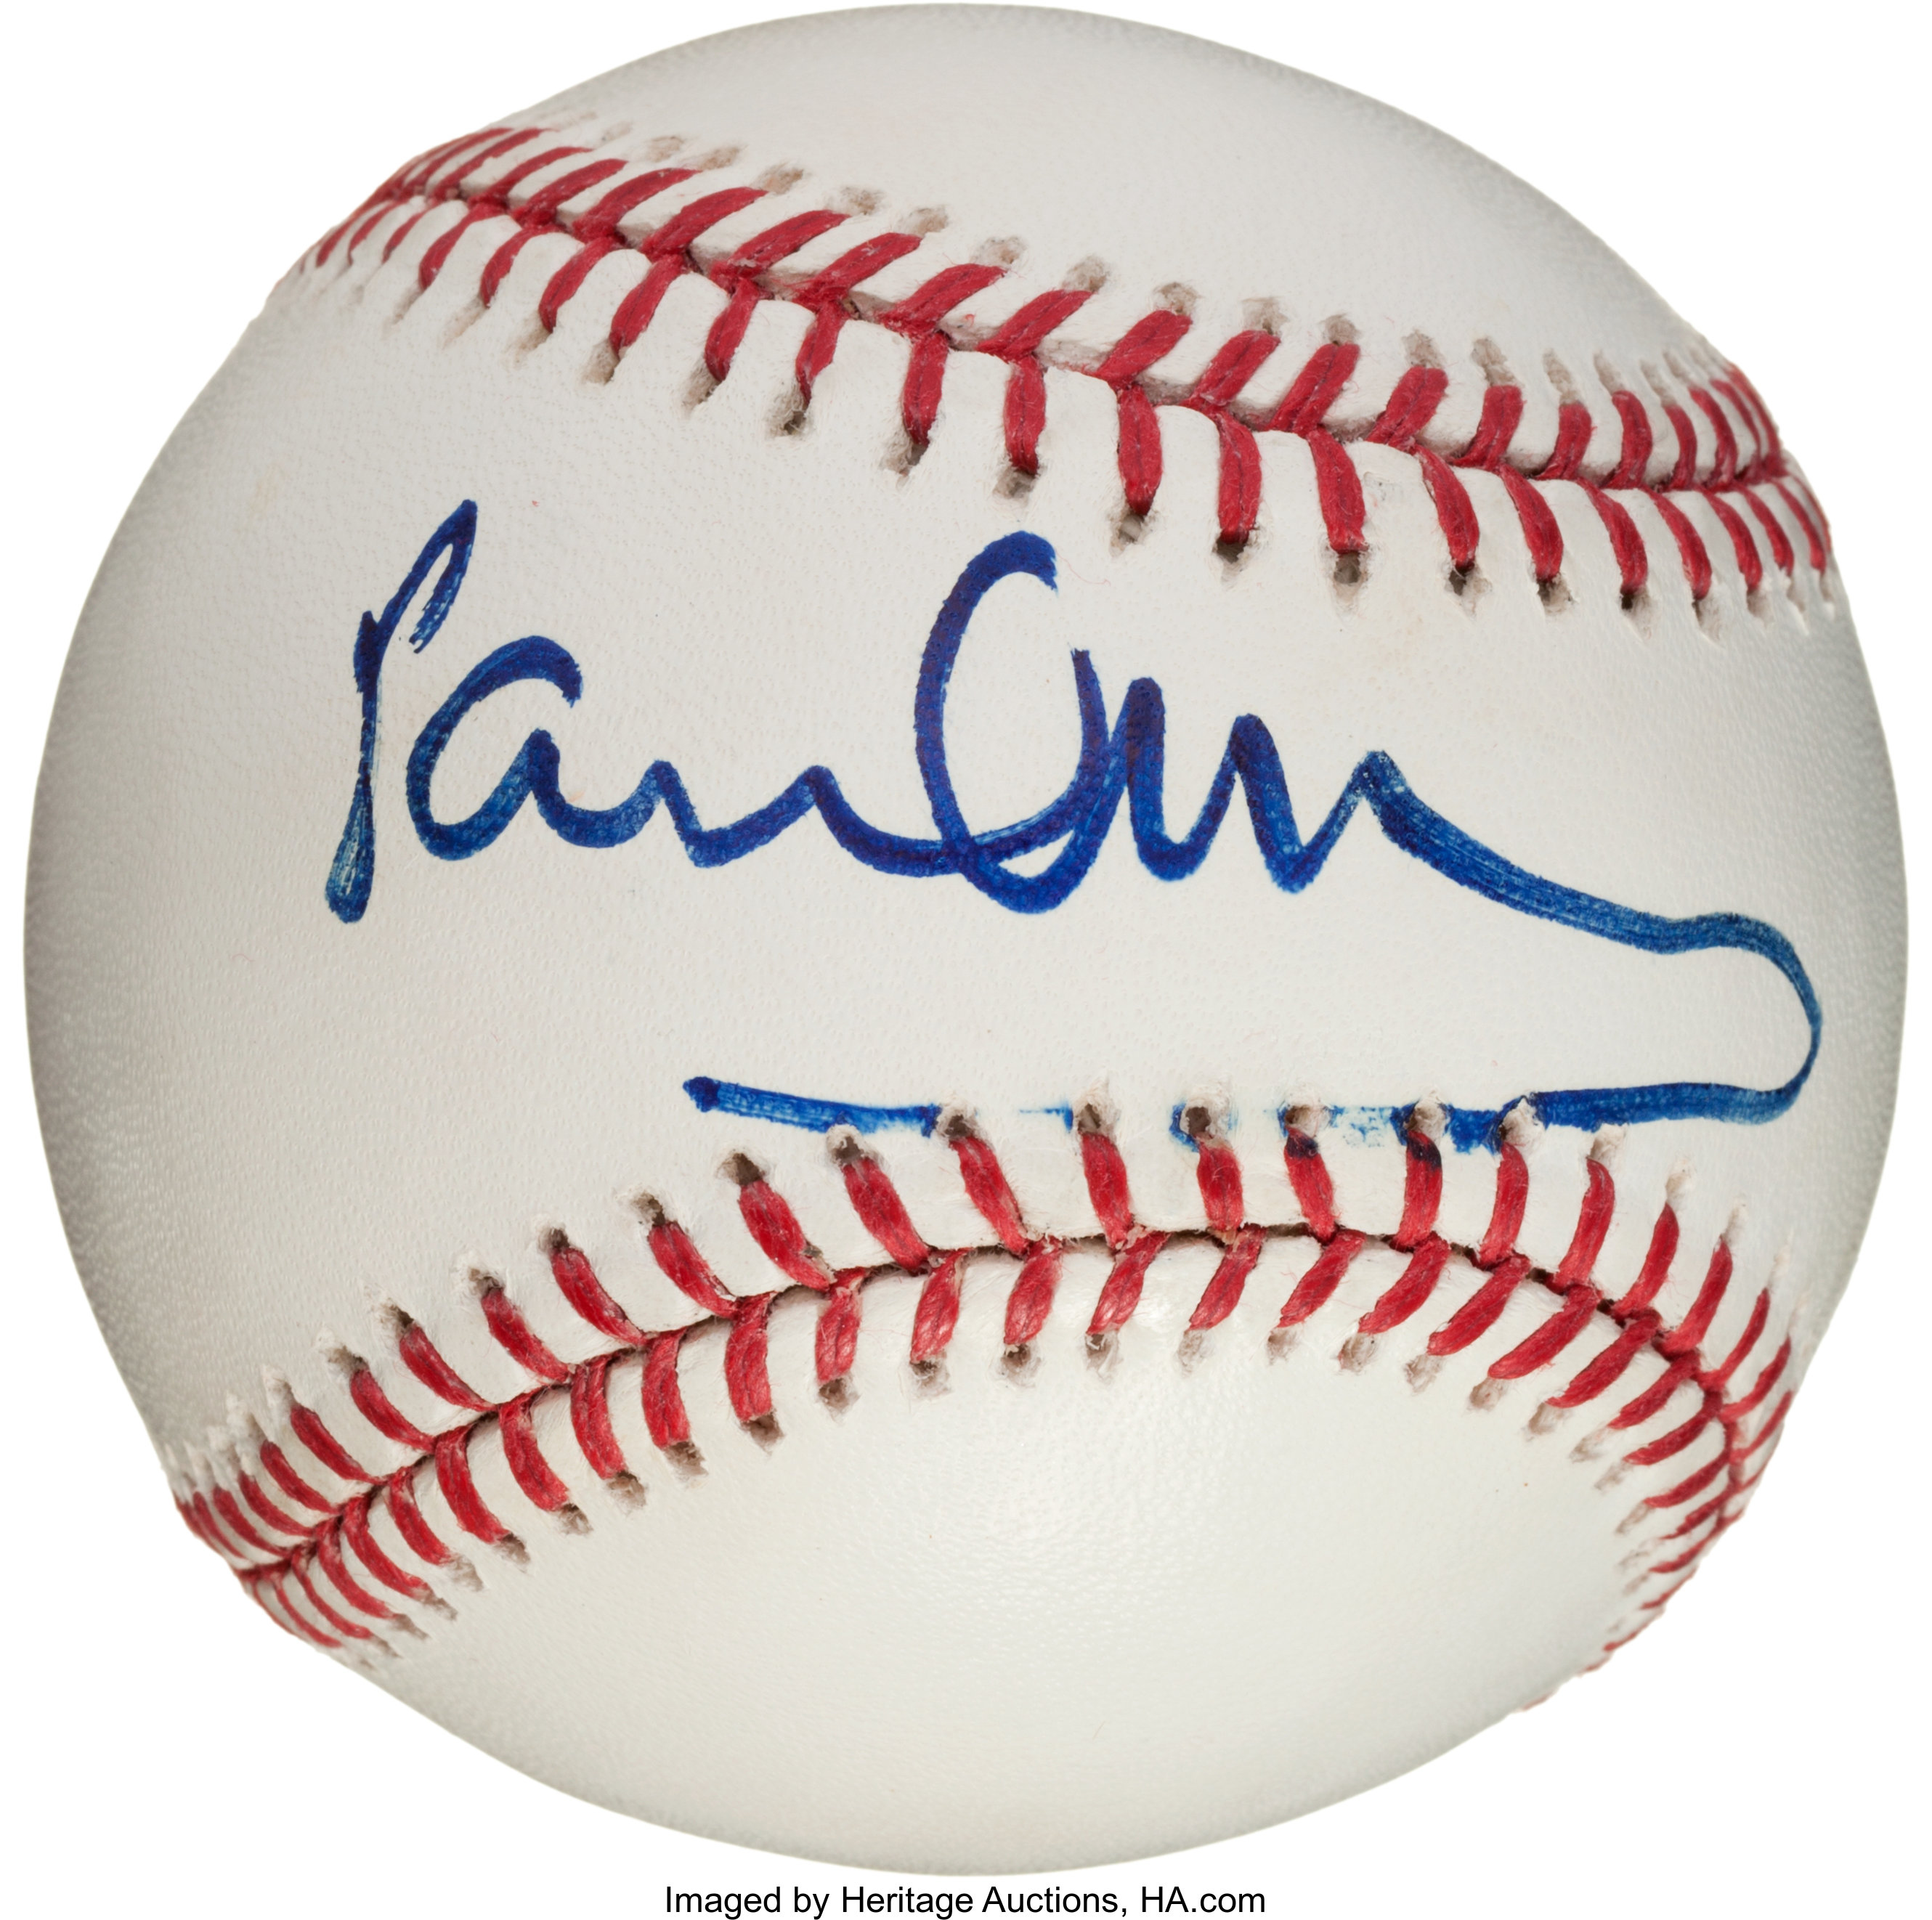 Paul McCartney Autographed Baseball - EXTREMELY RARE